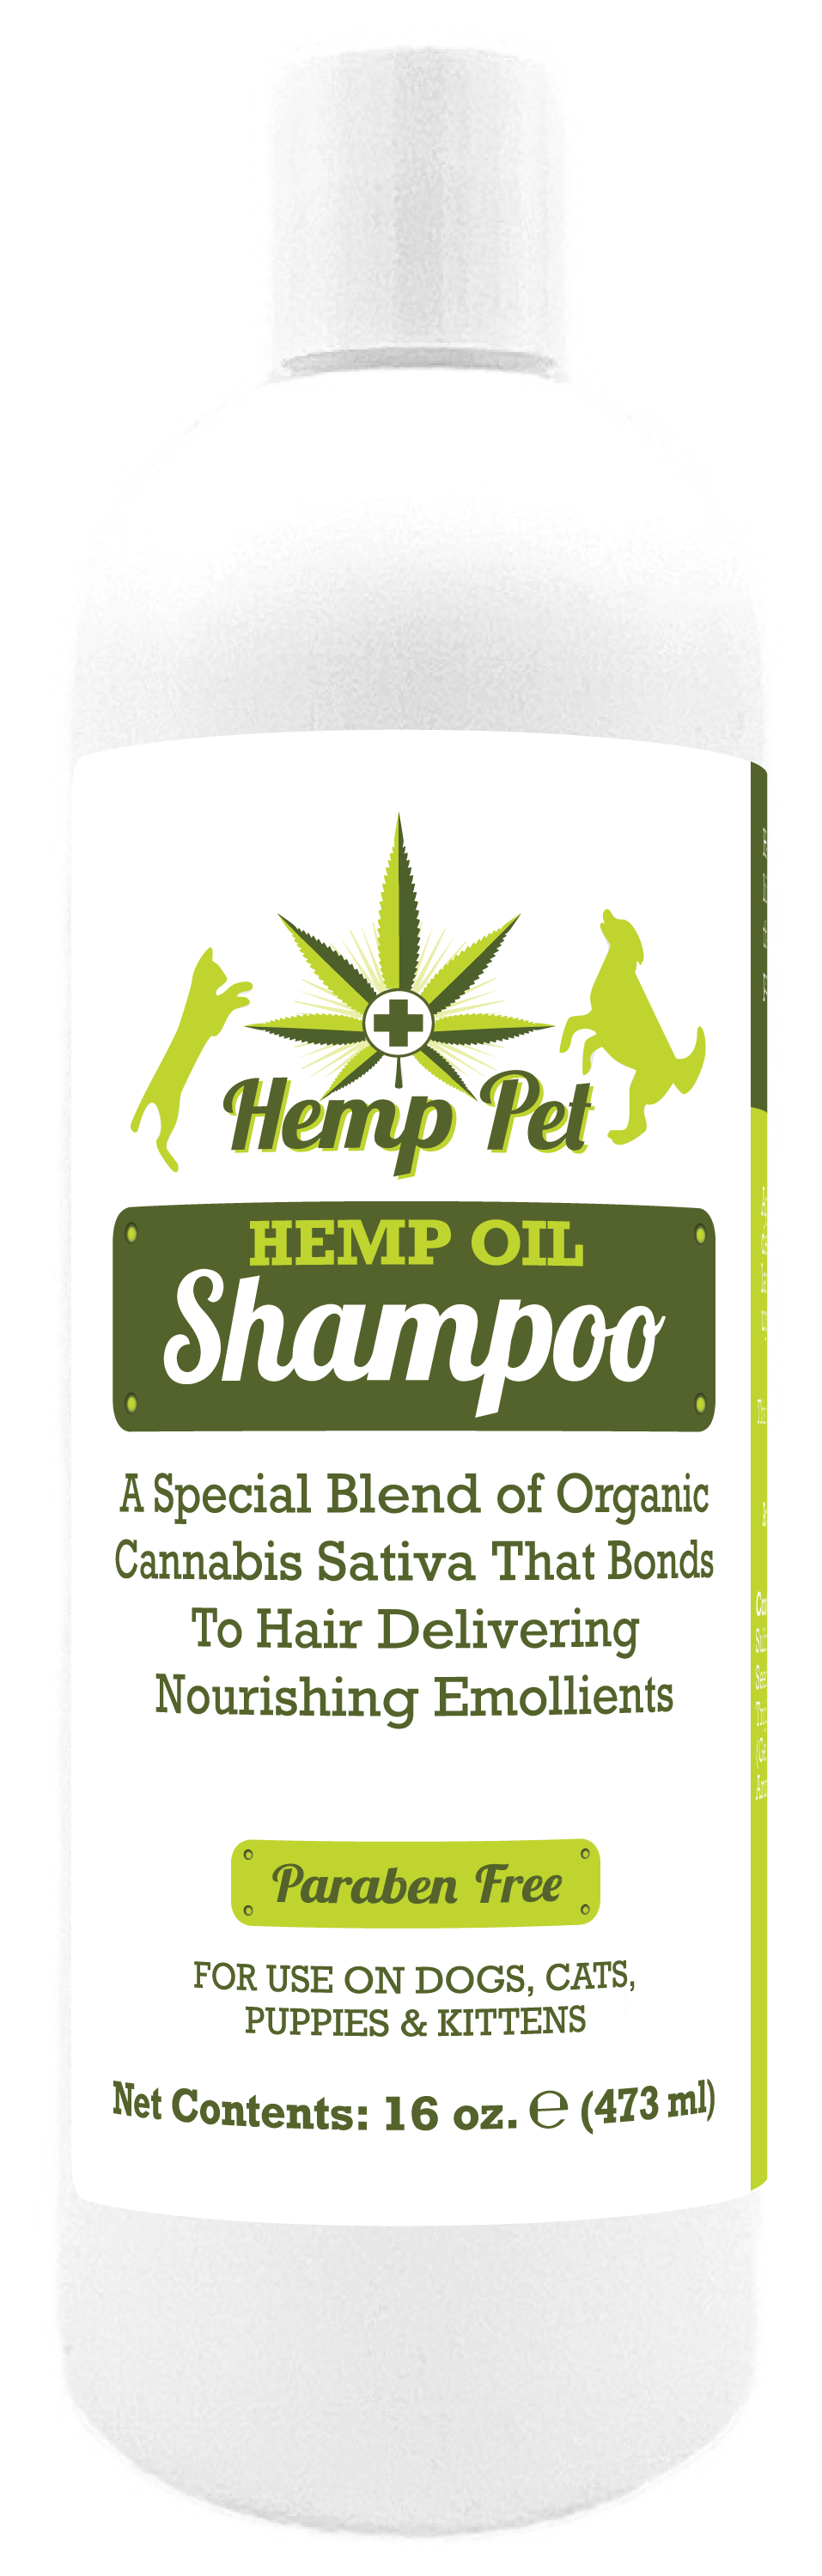 Hemp Pet Shampoo